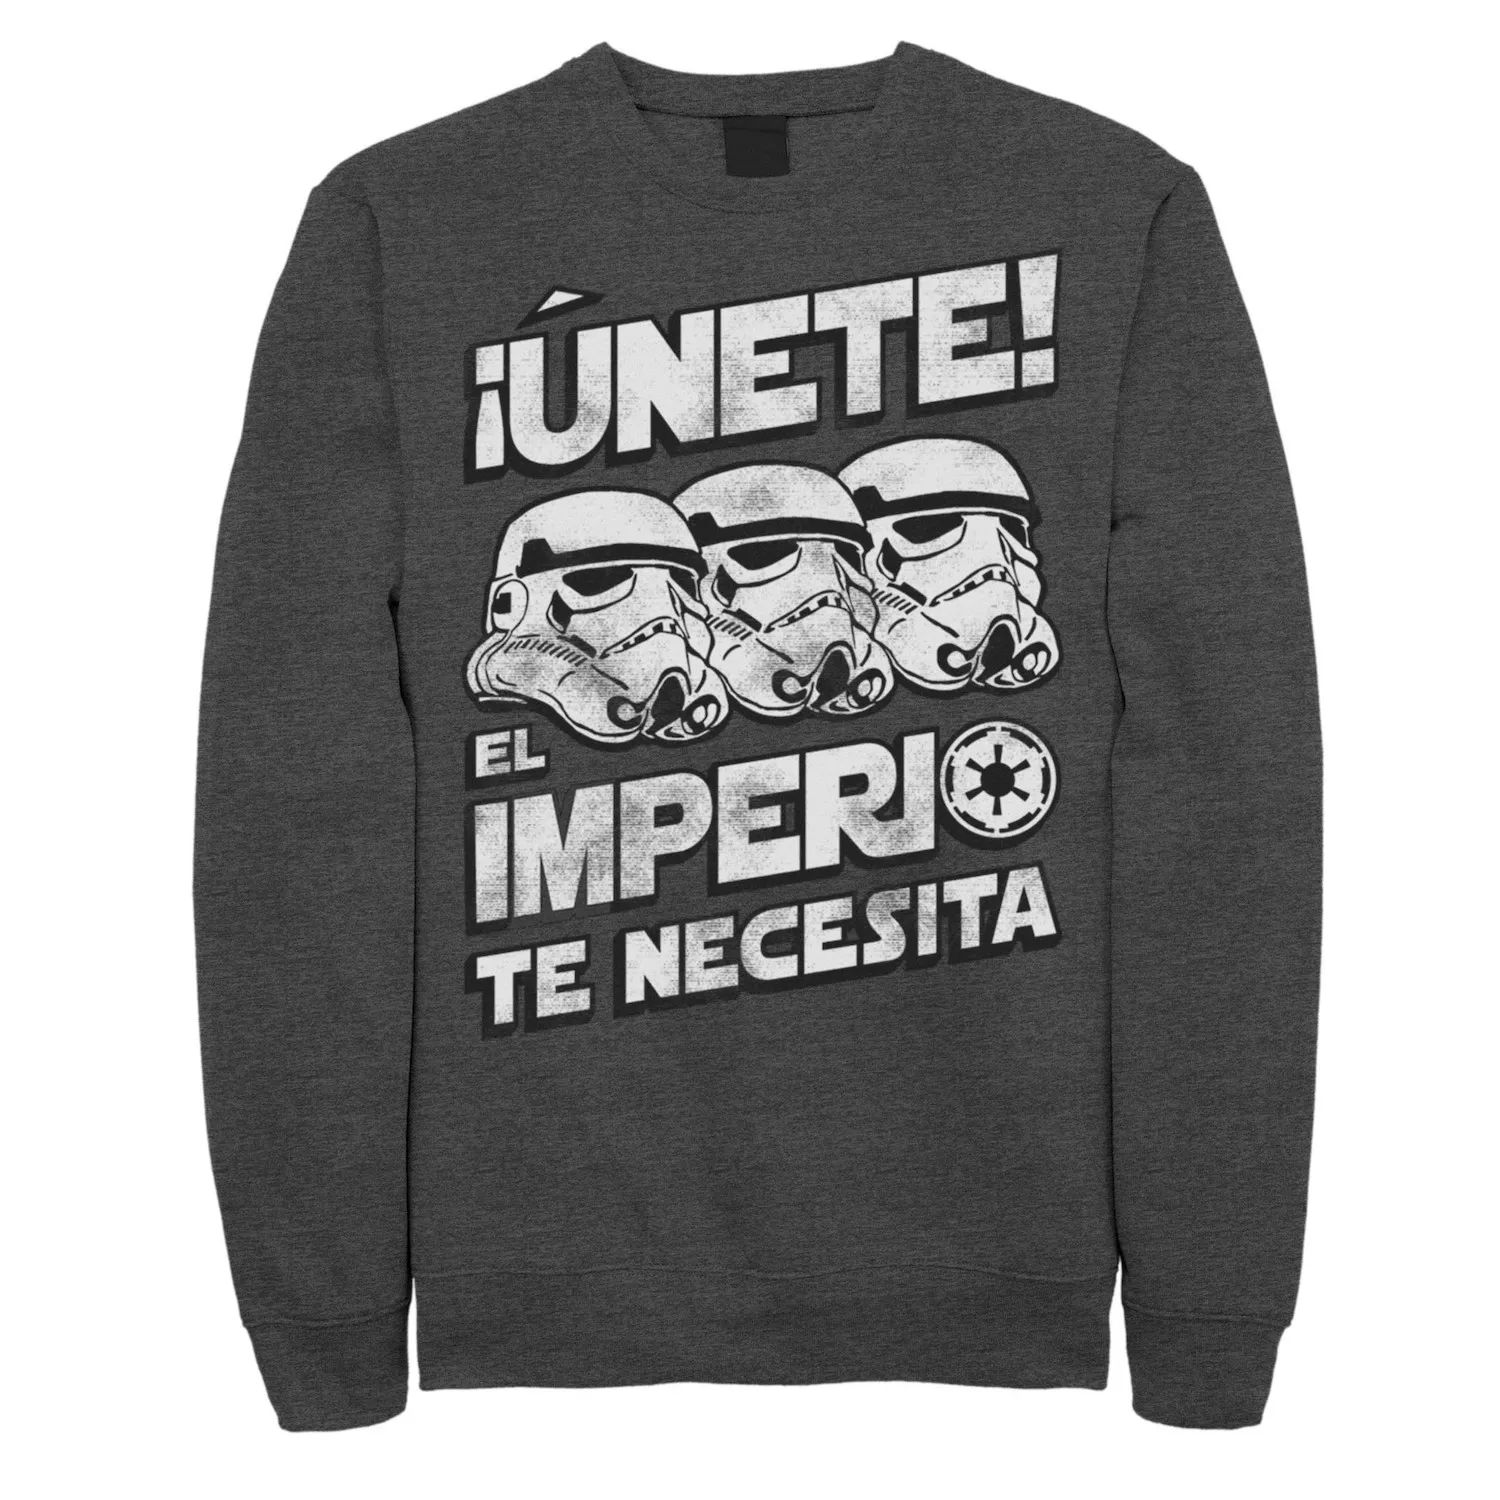 Мужской свитшот с выцветшим портретом «Звездные войны» Unete El Imperio Te Necesita Stormtrooper Licensed Character